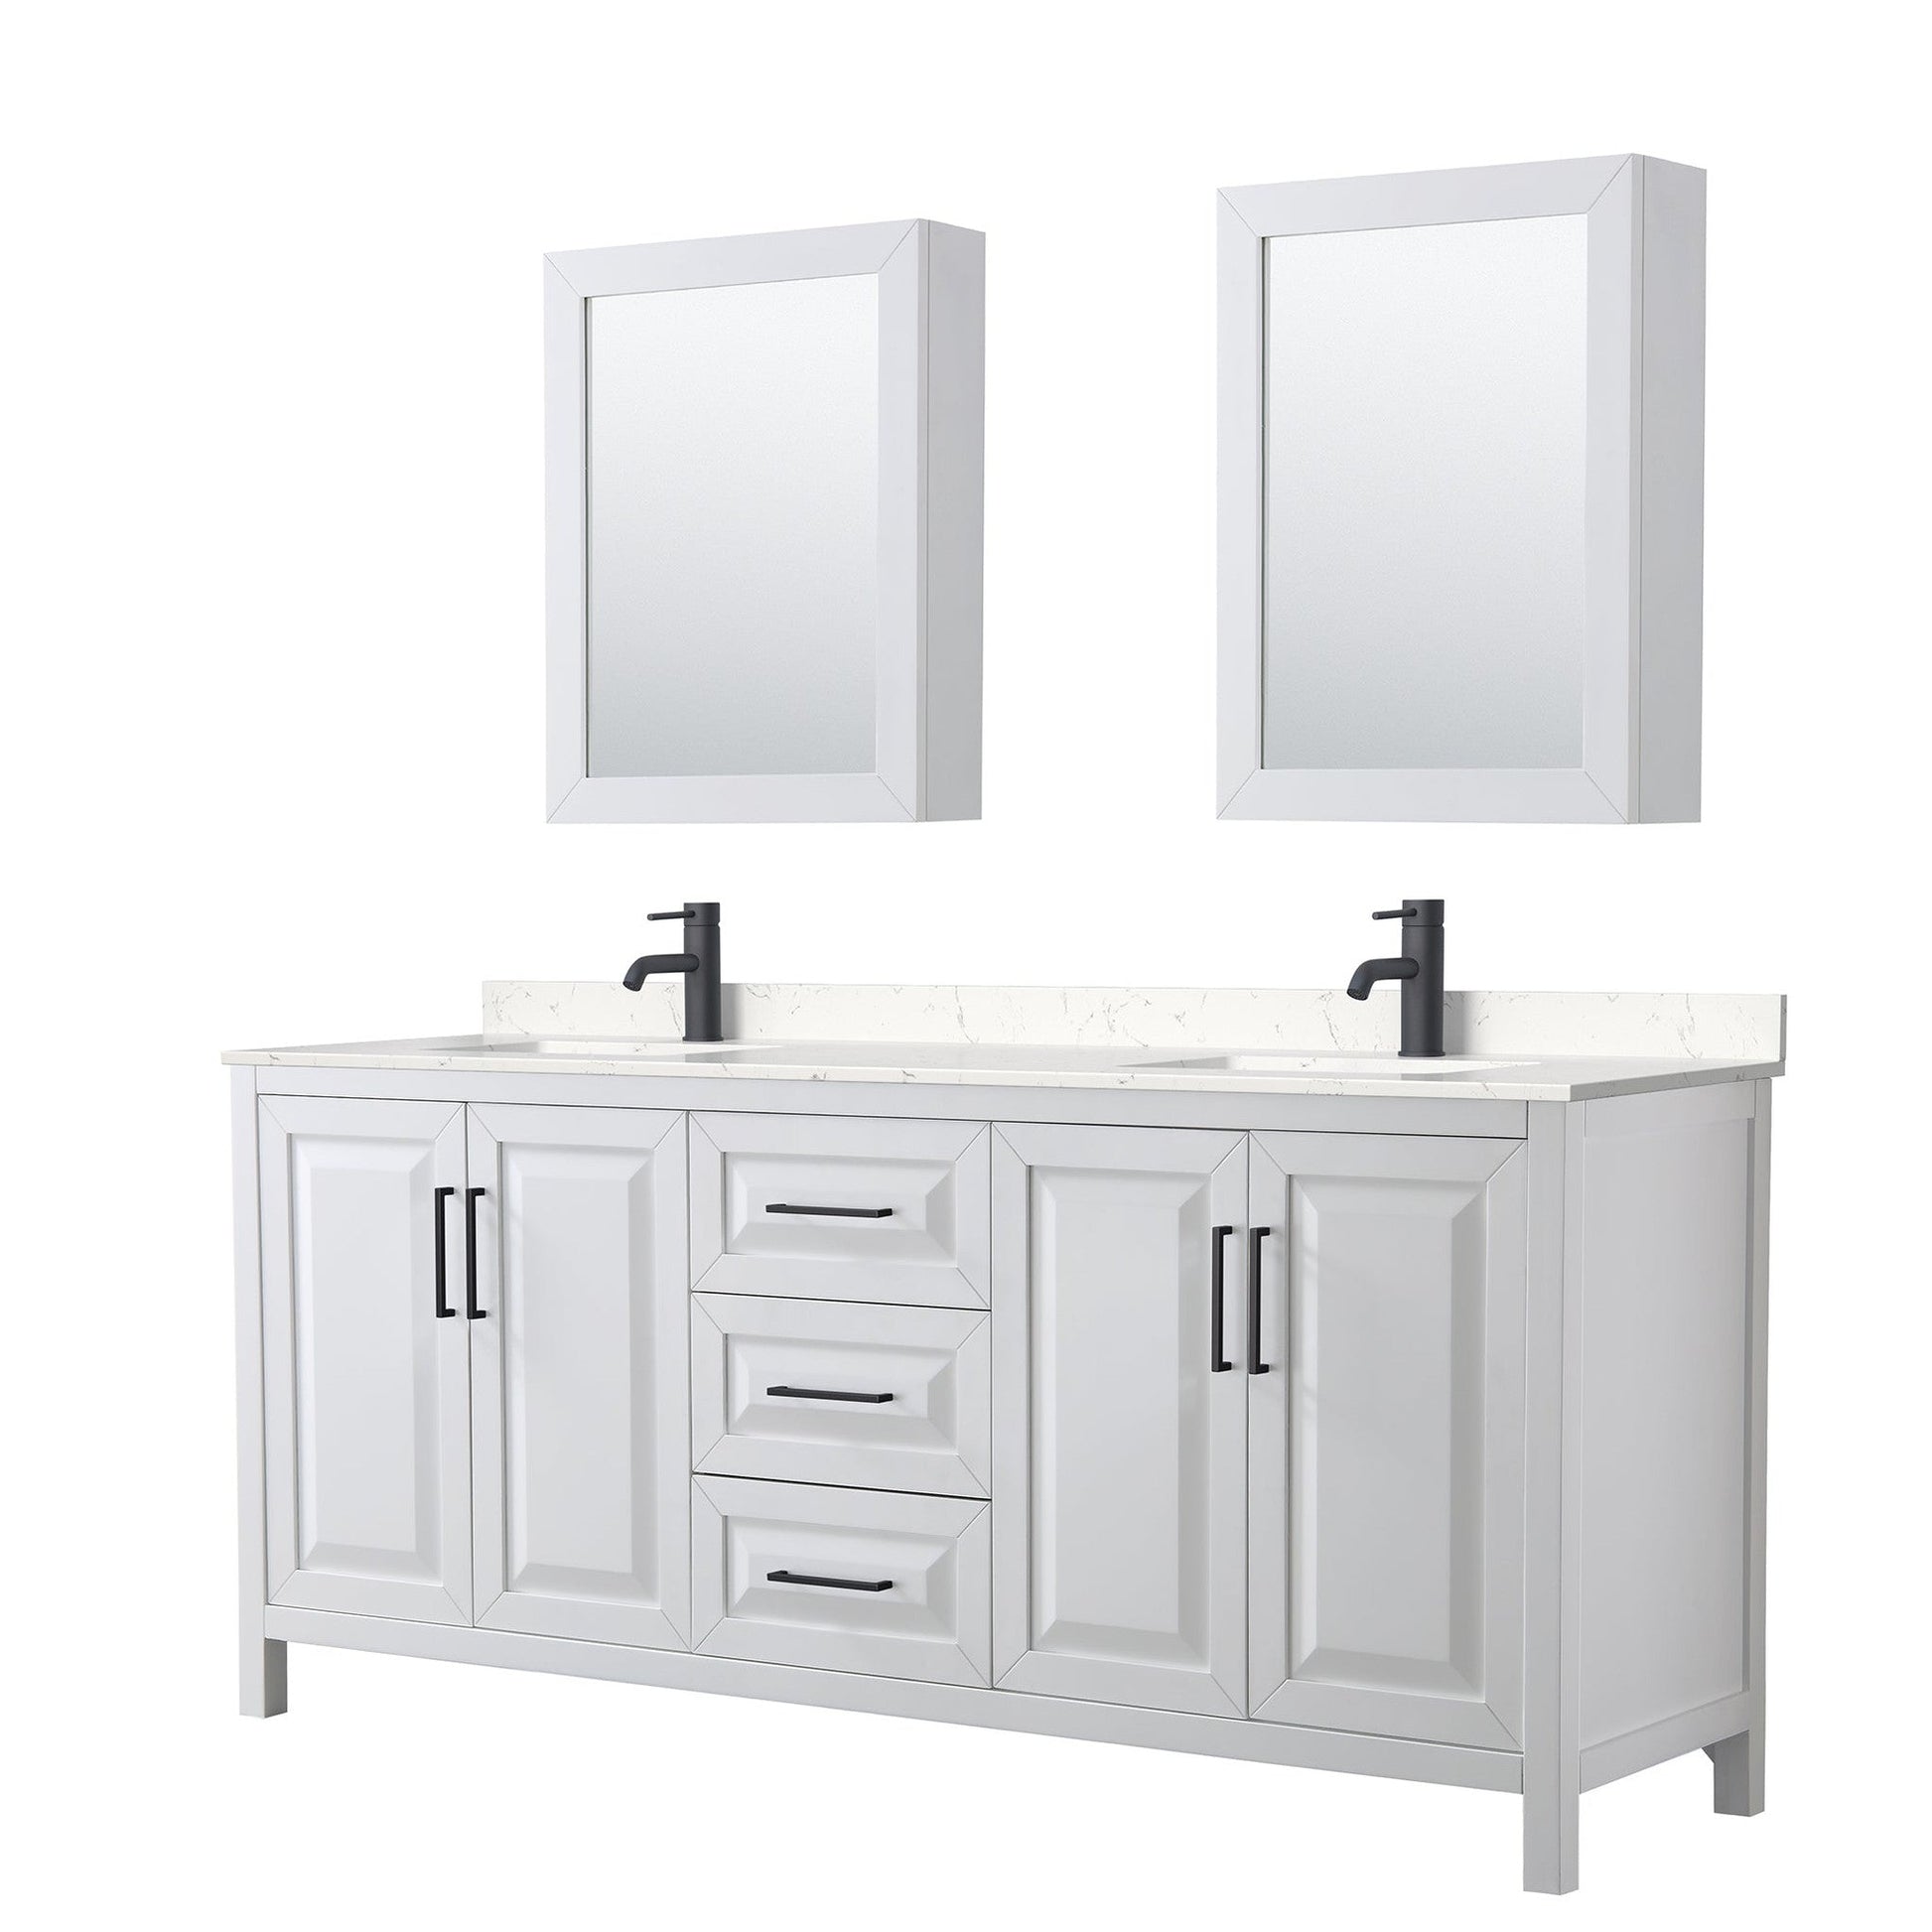 Daria 80" Double Bathroom Vanity in White, Carrara Cultured Marble Countertop, Undermount Square Sinks, Matte Black Trim, Medicine Cabinets